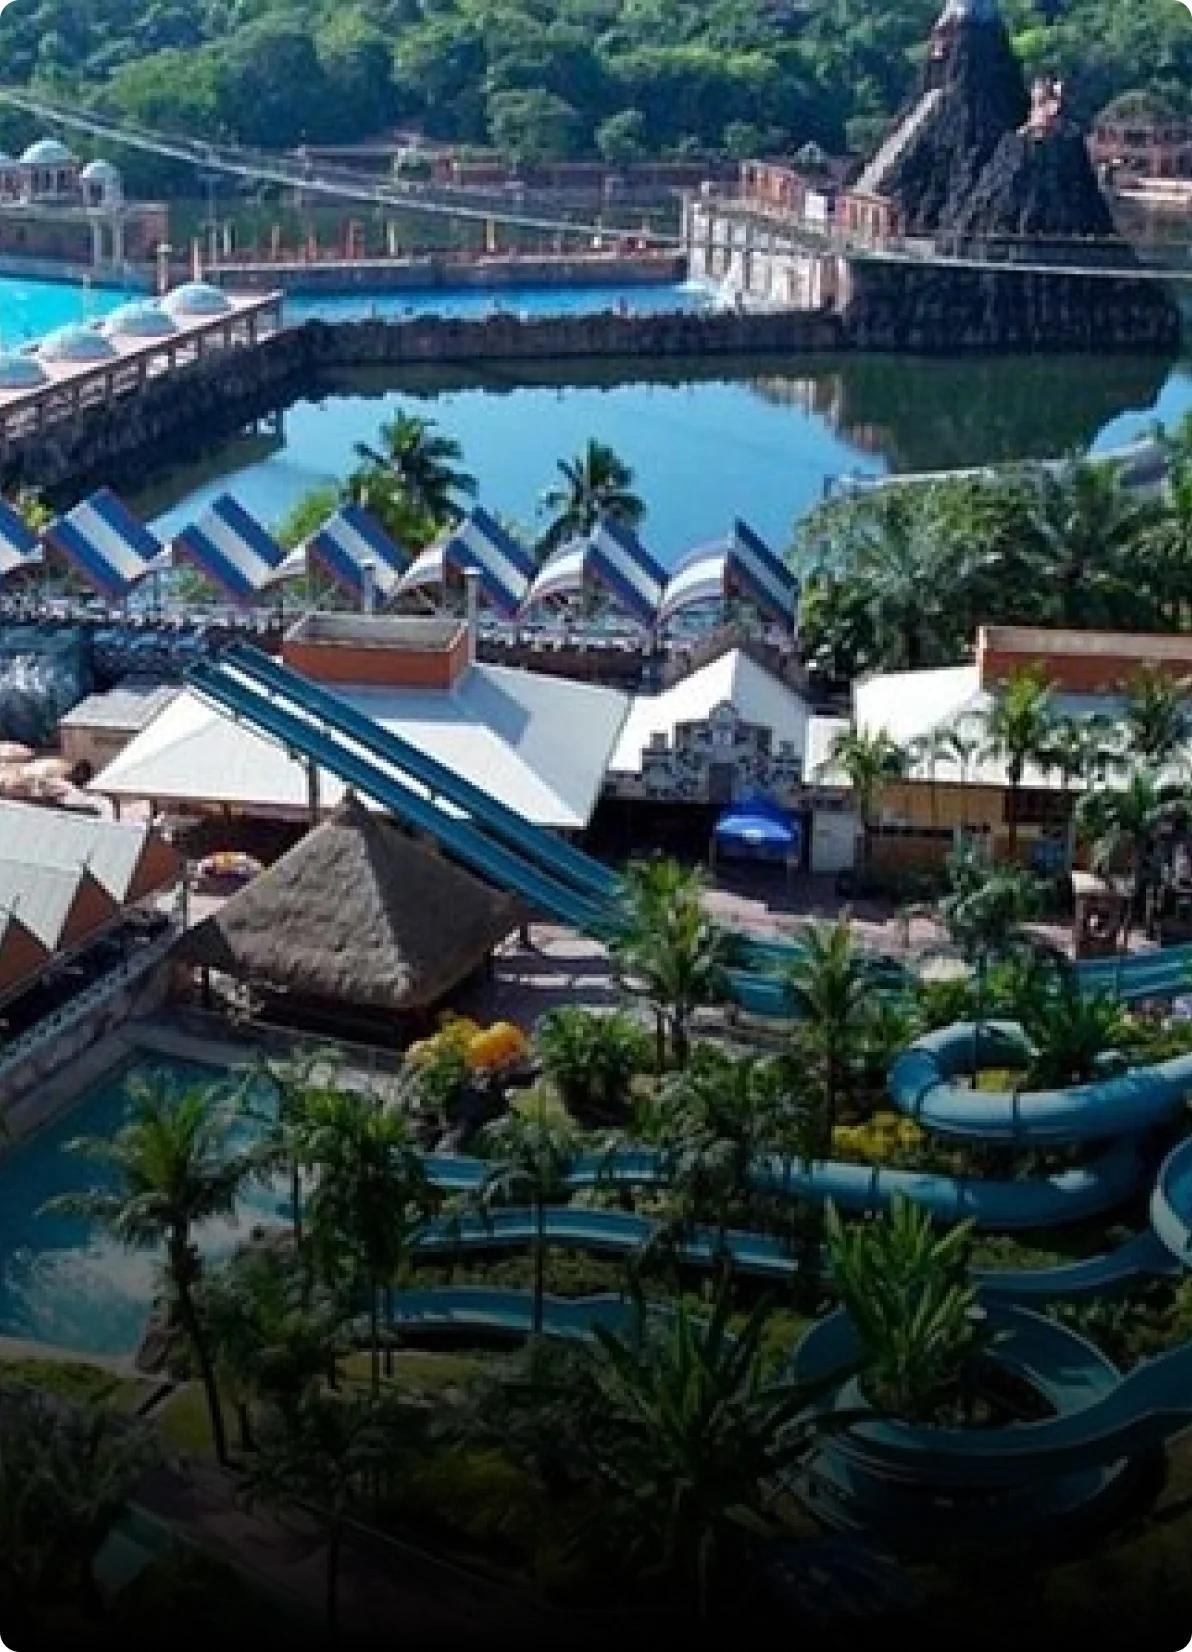 Sunway Lagoon Theme Park